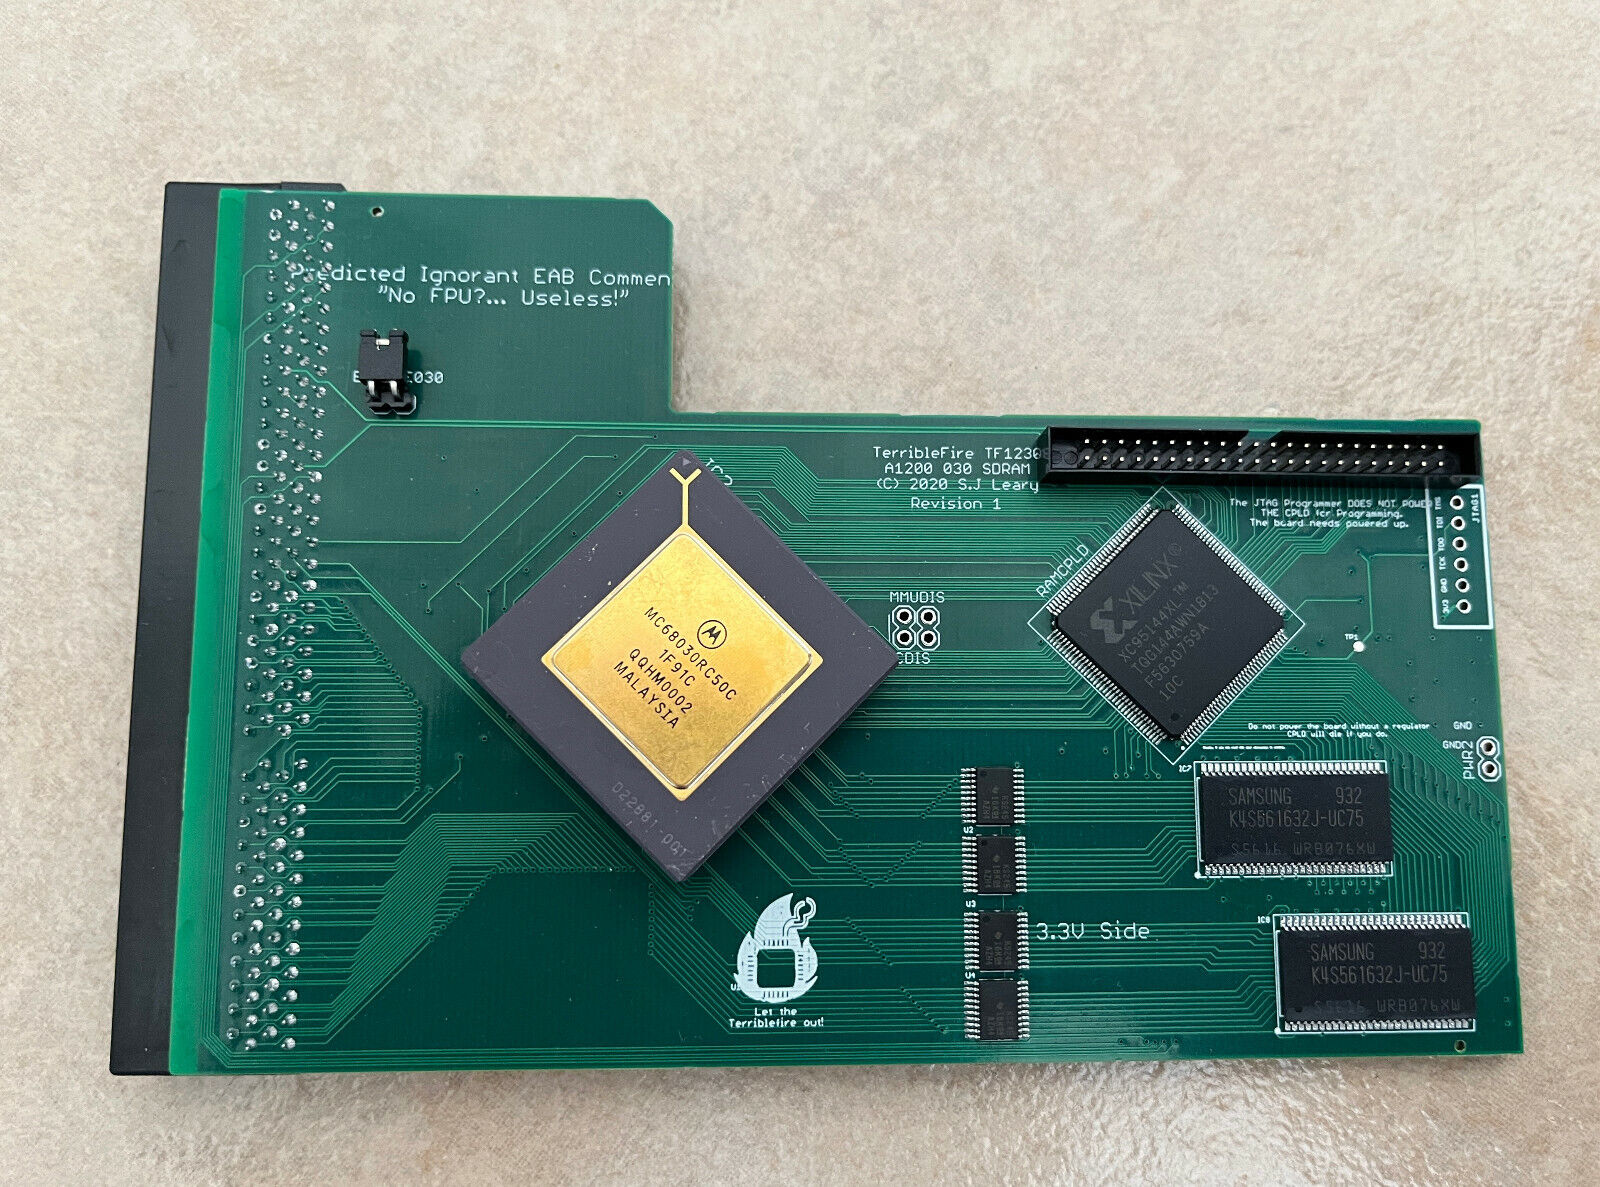 TF1230: an Amiga 1200 accelerator with 68030/50, 64MB RAM + extra IDE interface